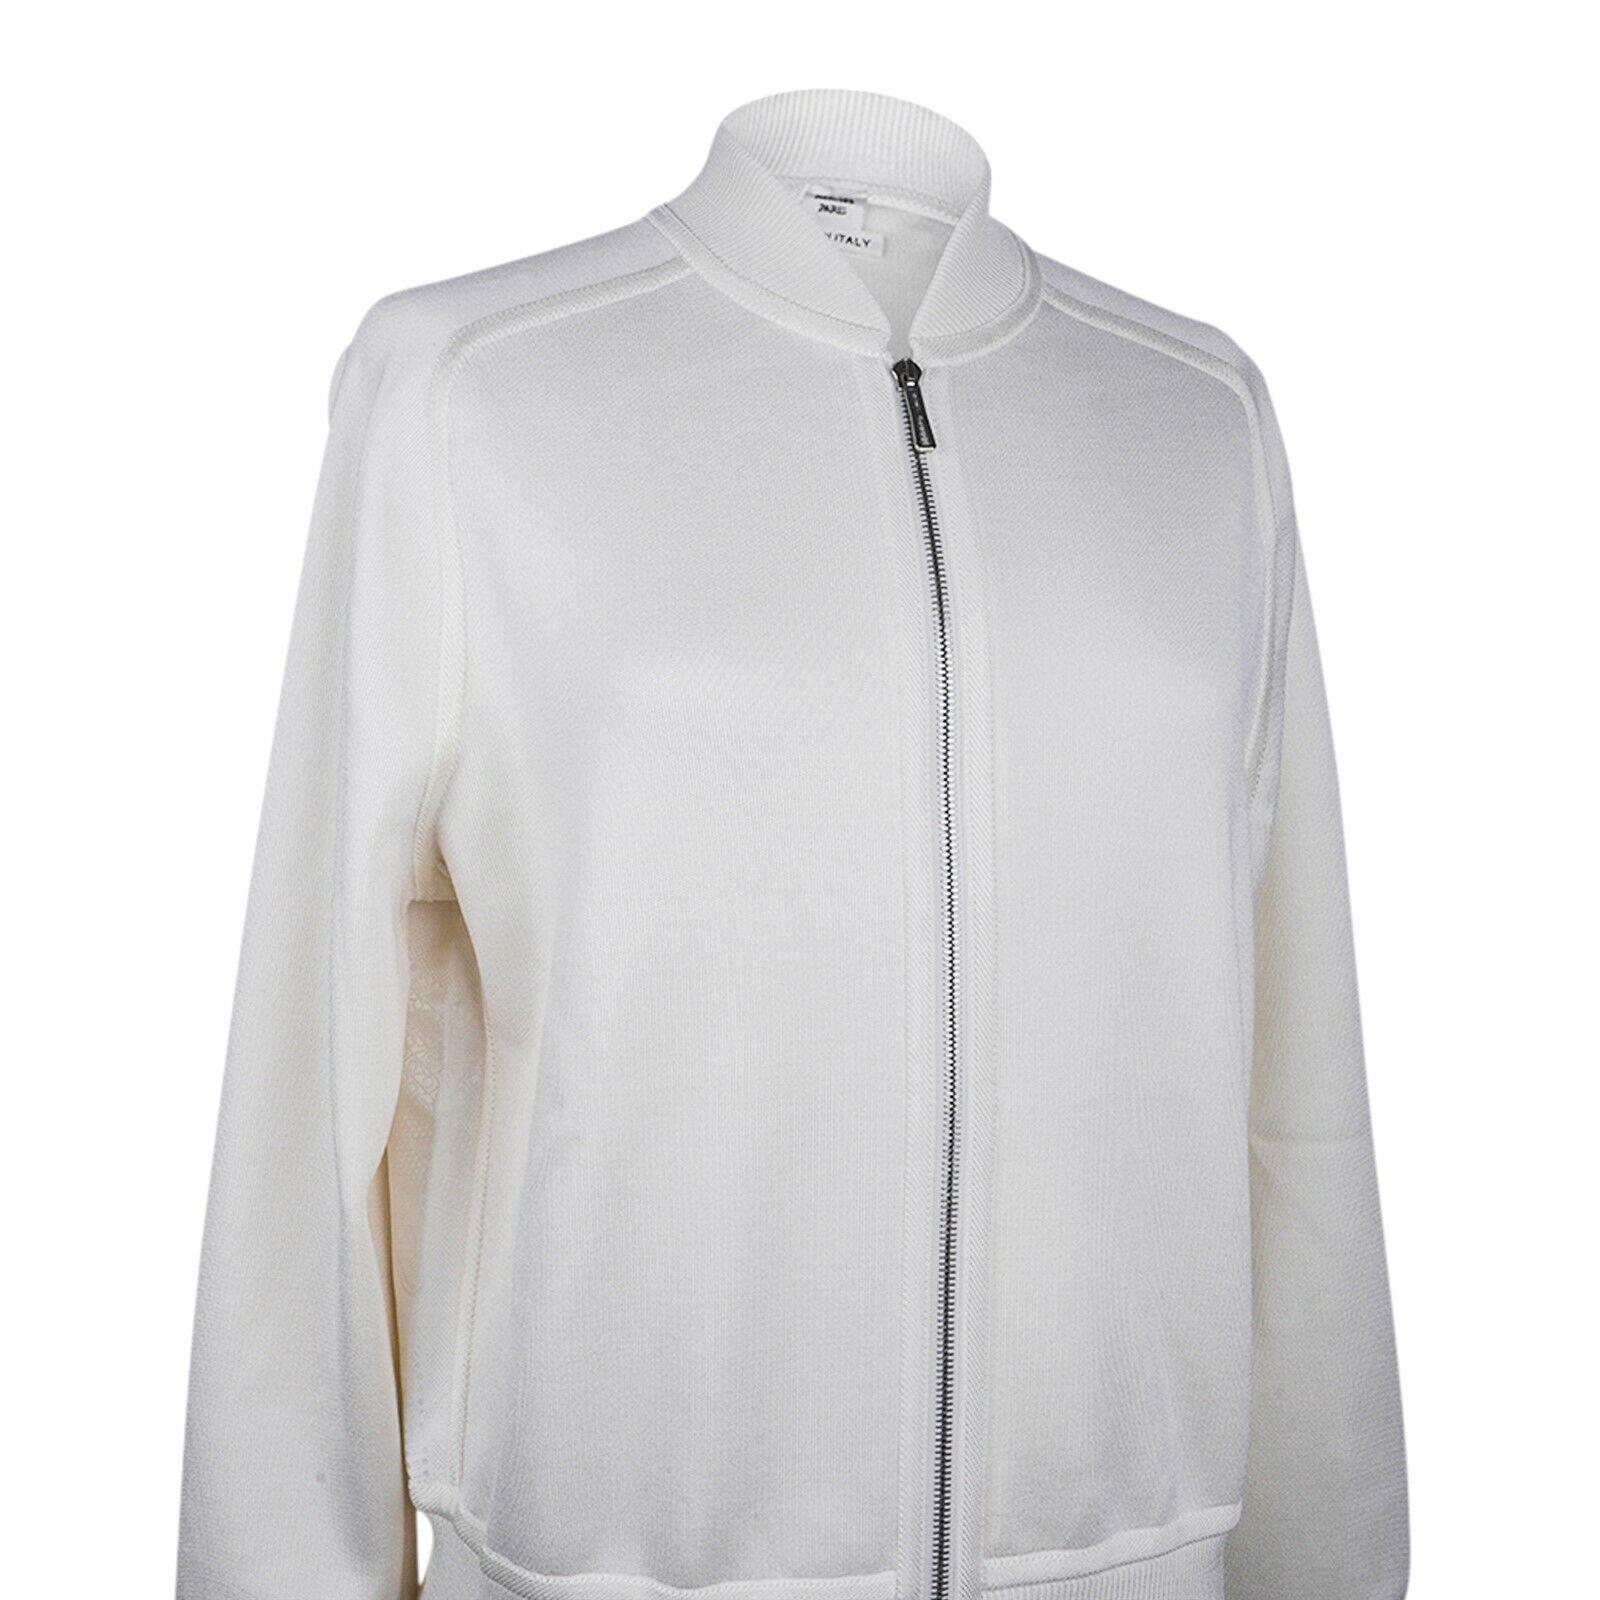 Hermes Cardigan Zip Clic Clac Winter White Jacket 38 / 6 New | eBay